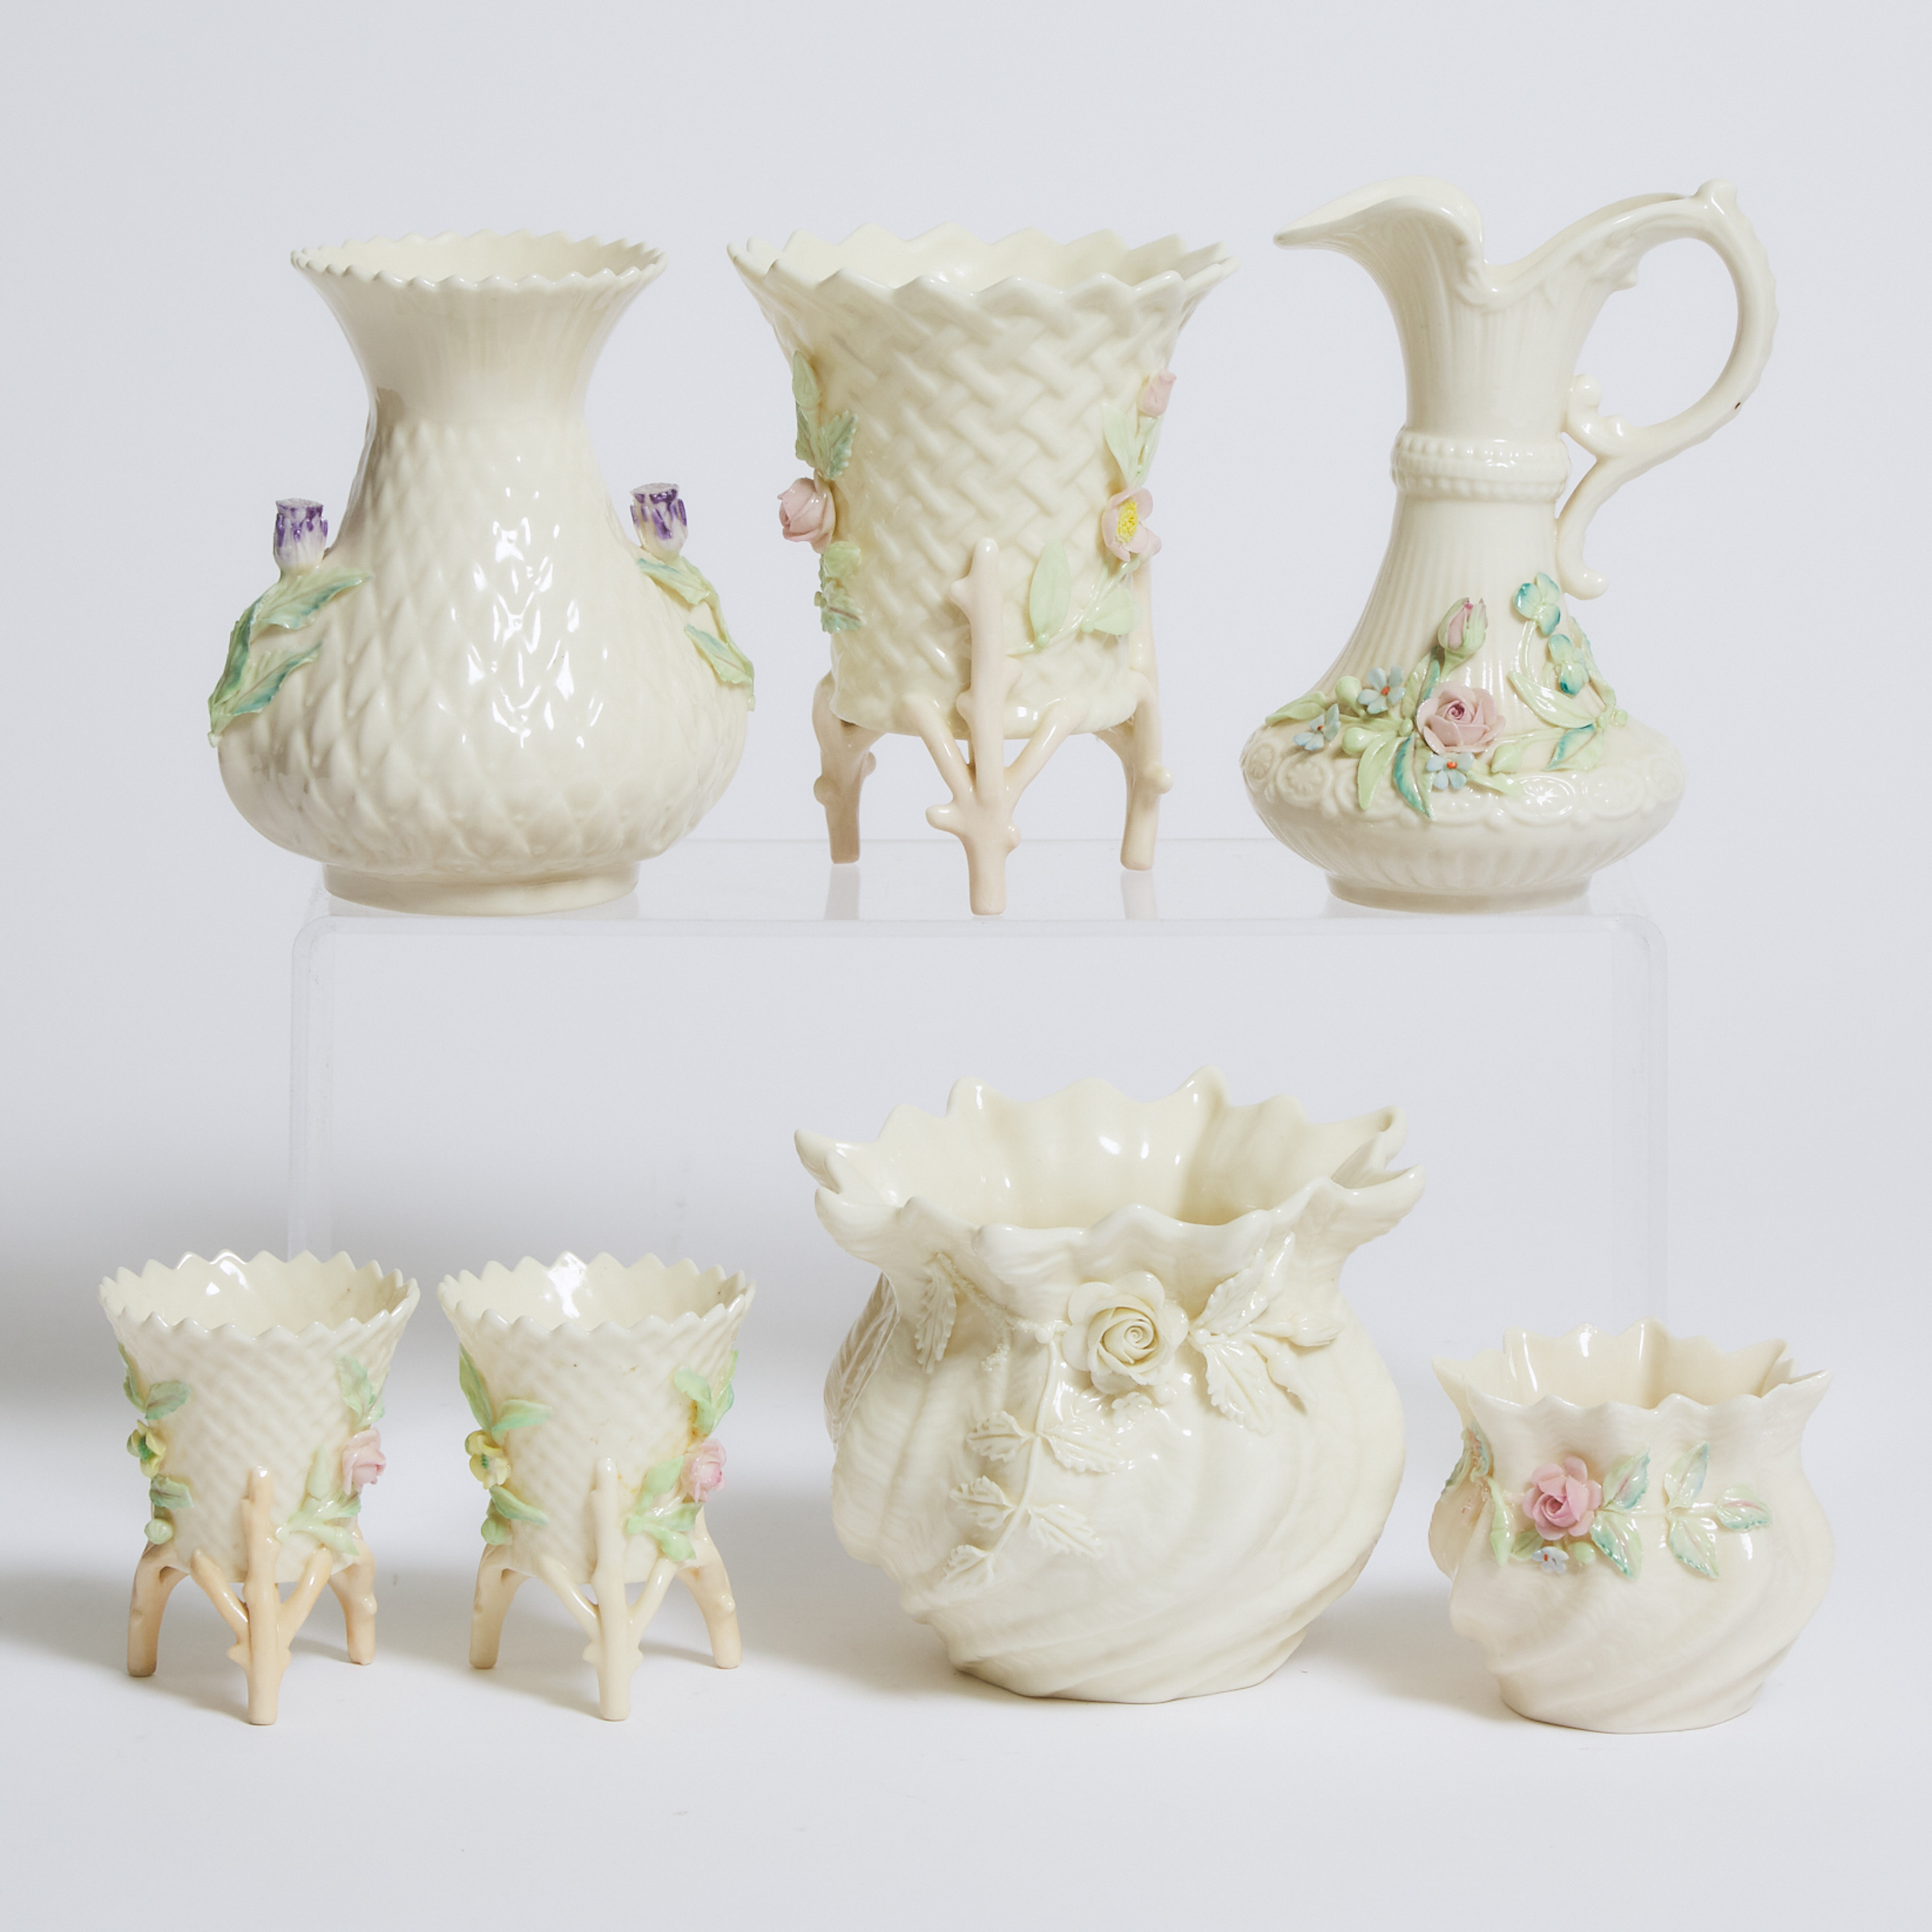 Six Belleek Vases and a Jug, 20th century